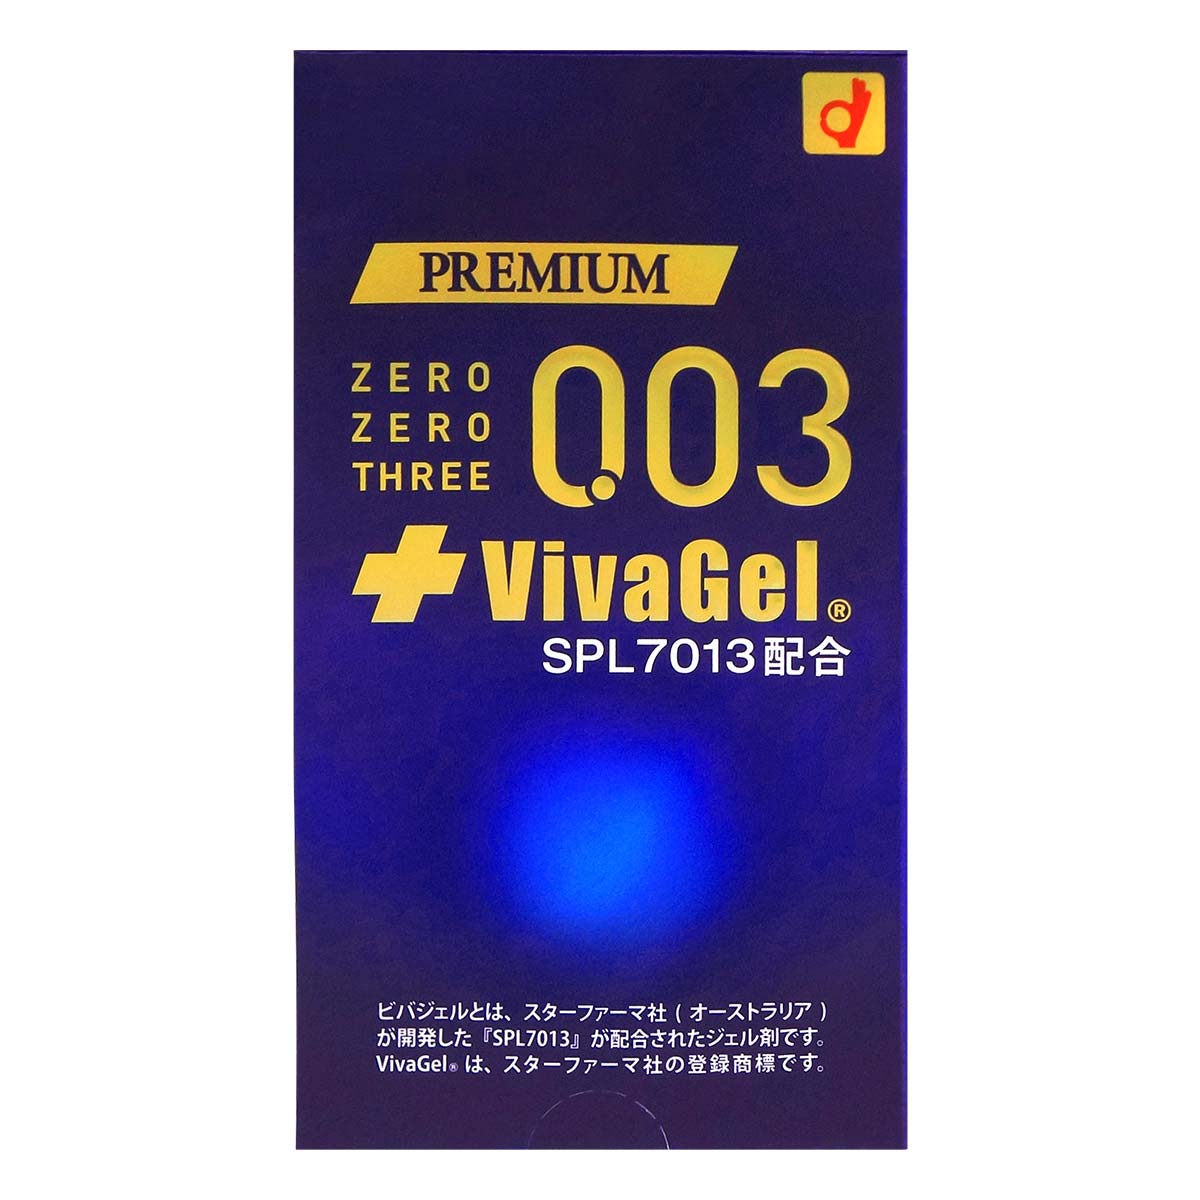 Zero Zero Three 0.03 Vivagel (Japan Edition) 10's Pack Latex Condom-p_2